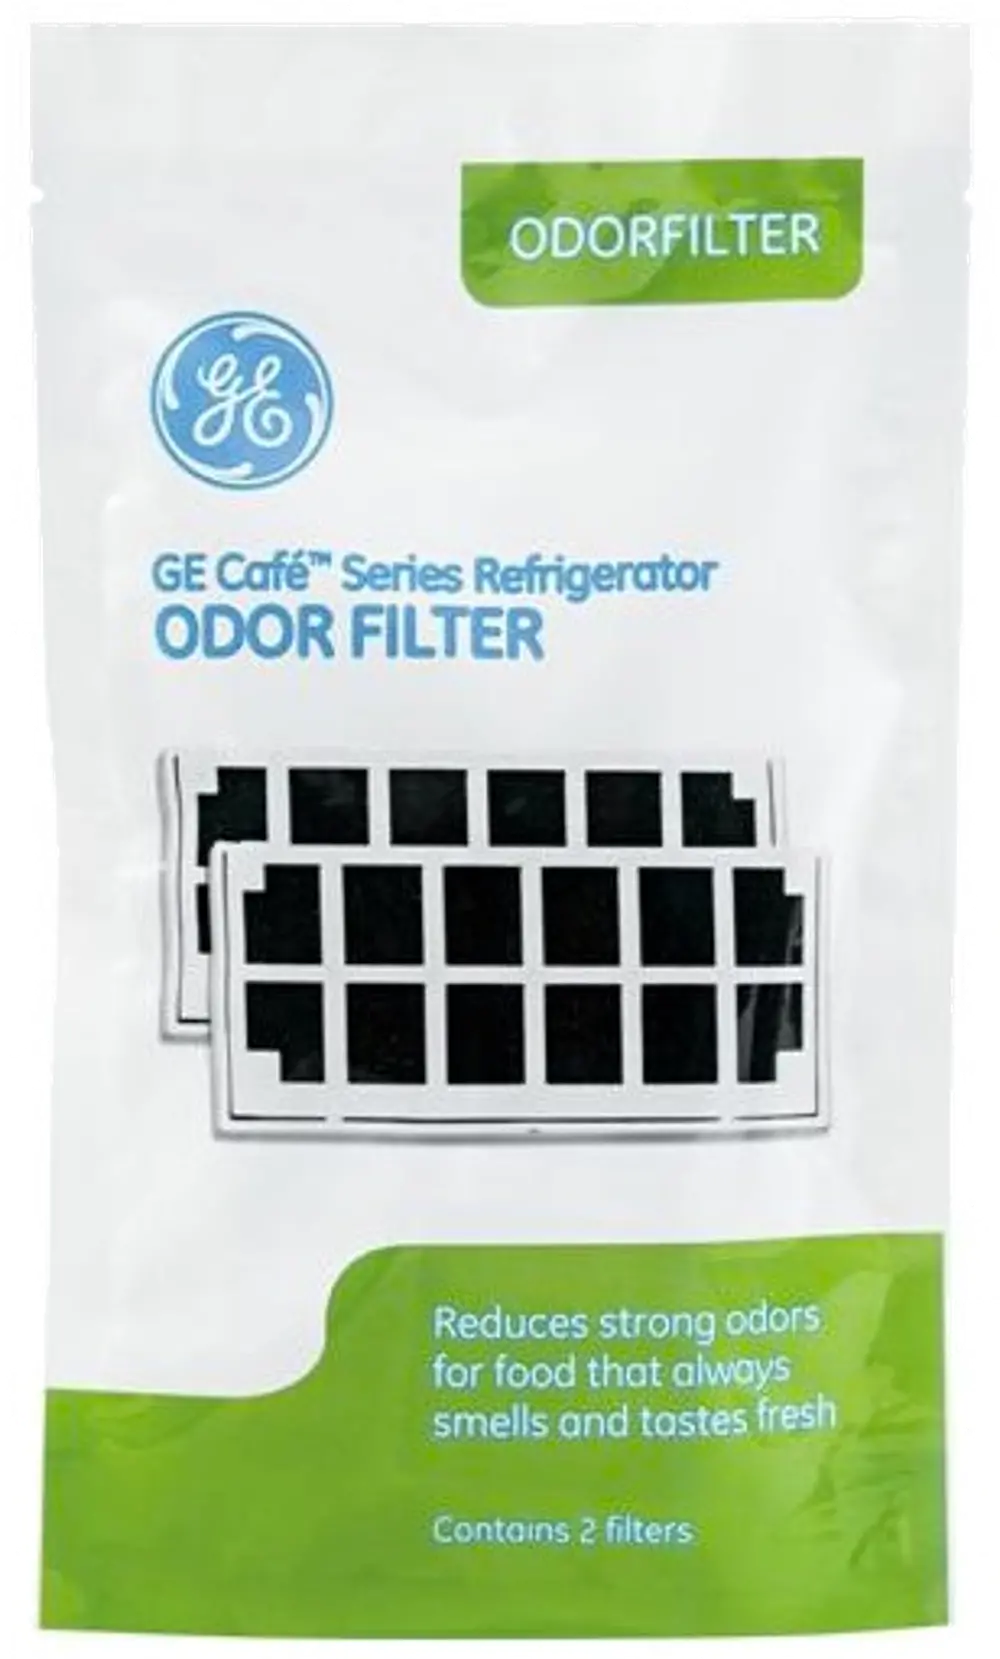 ODORFILTER Cafe Refrigerator Air Filter-1